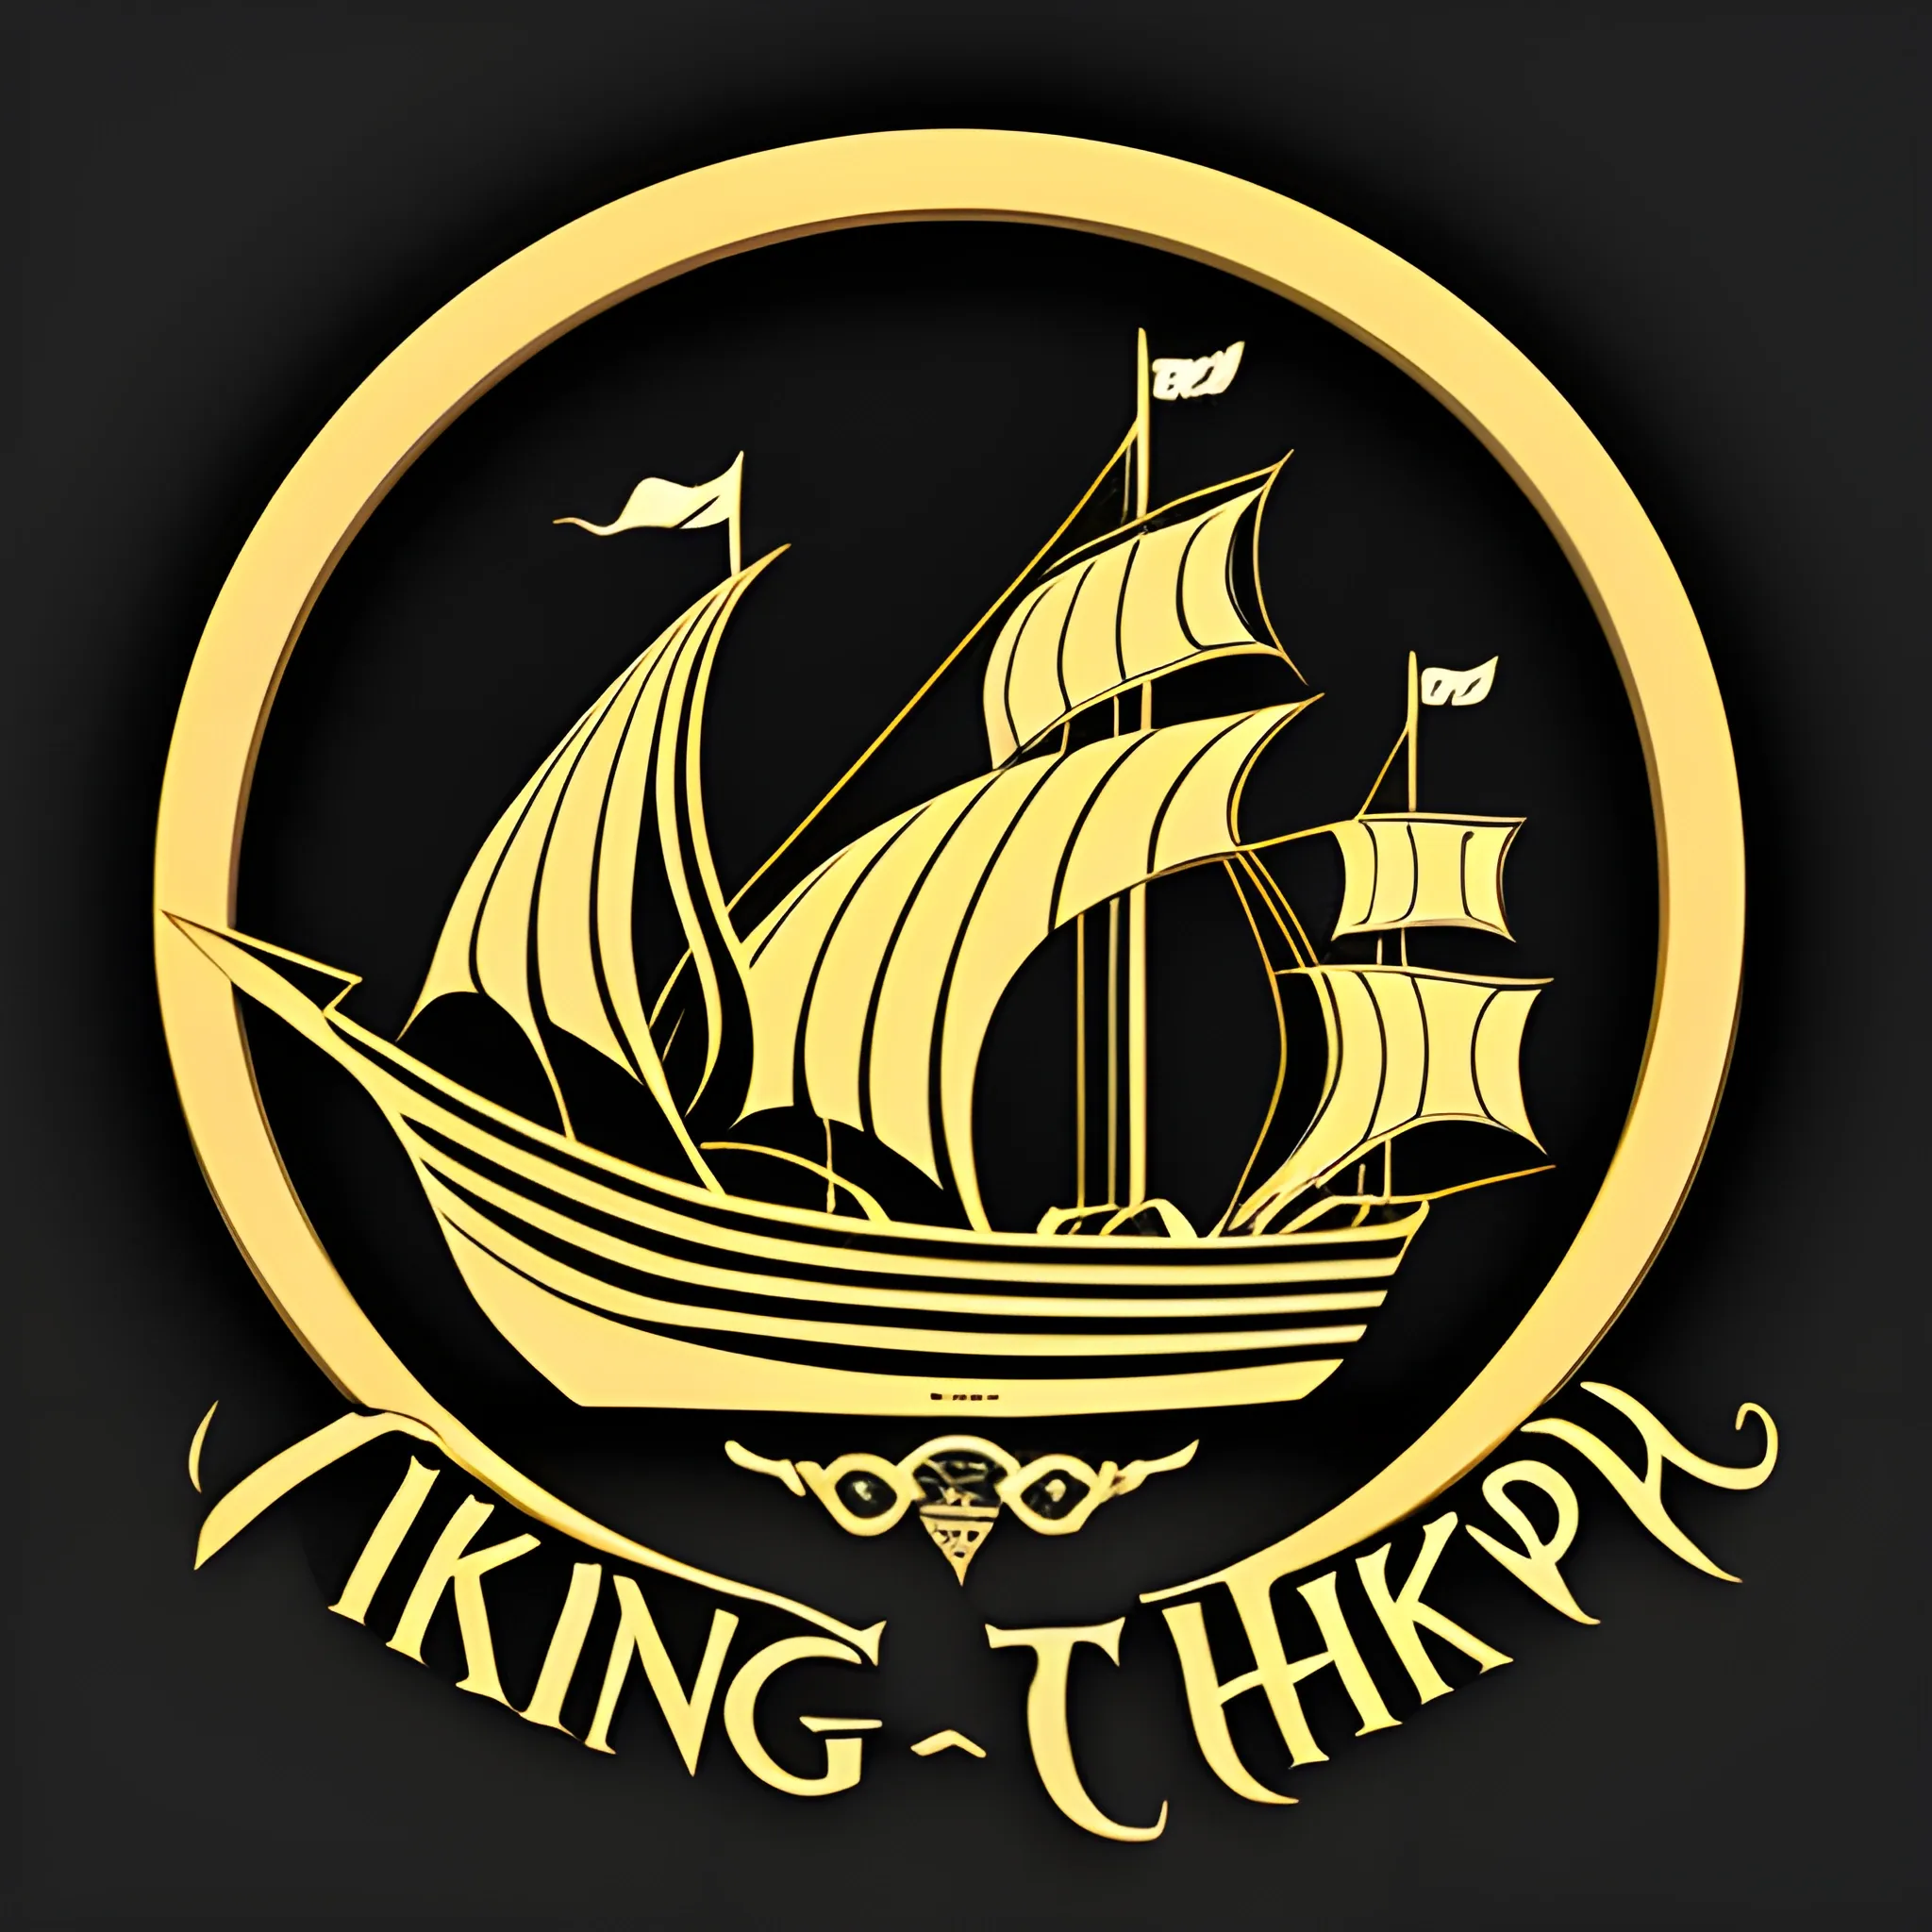 viking ship, drakkar, logo, black background, no masts